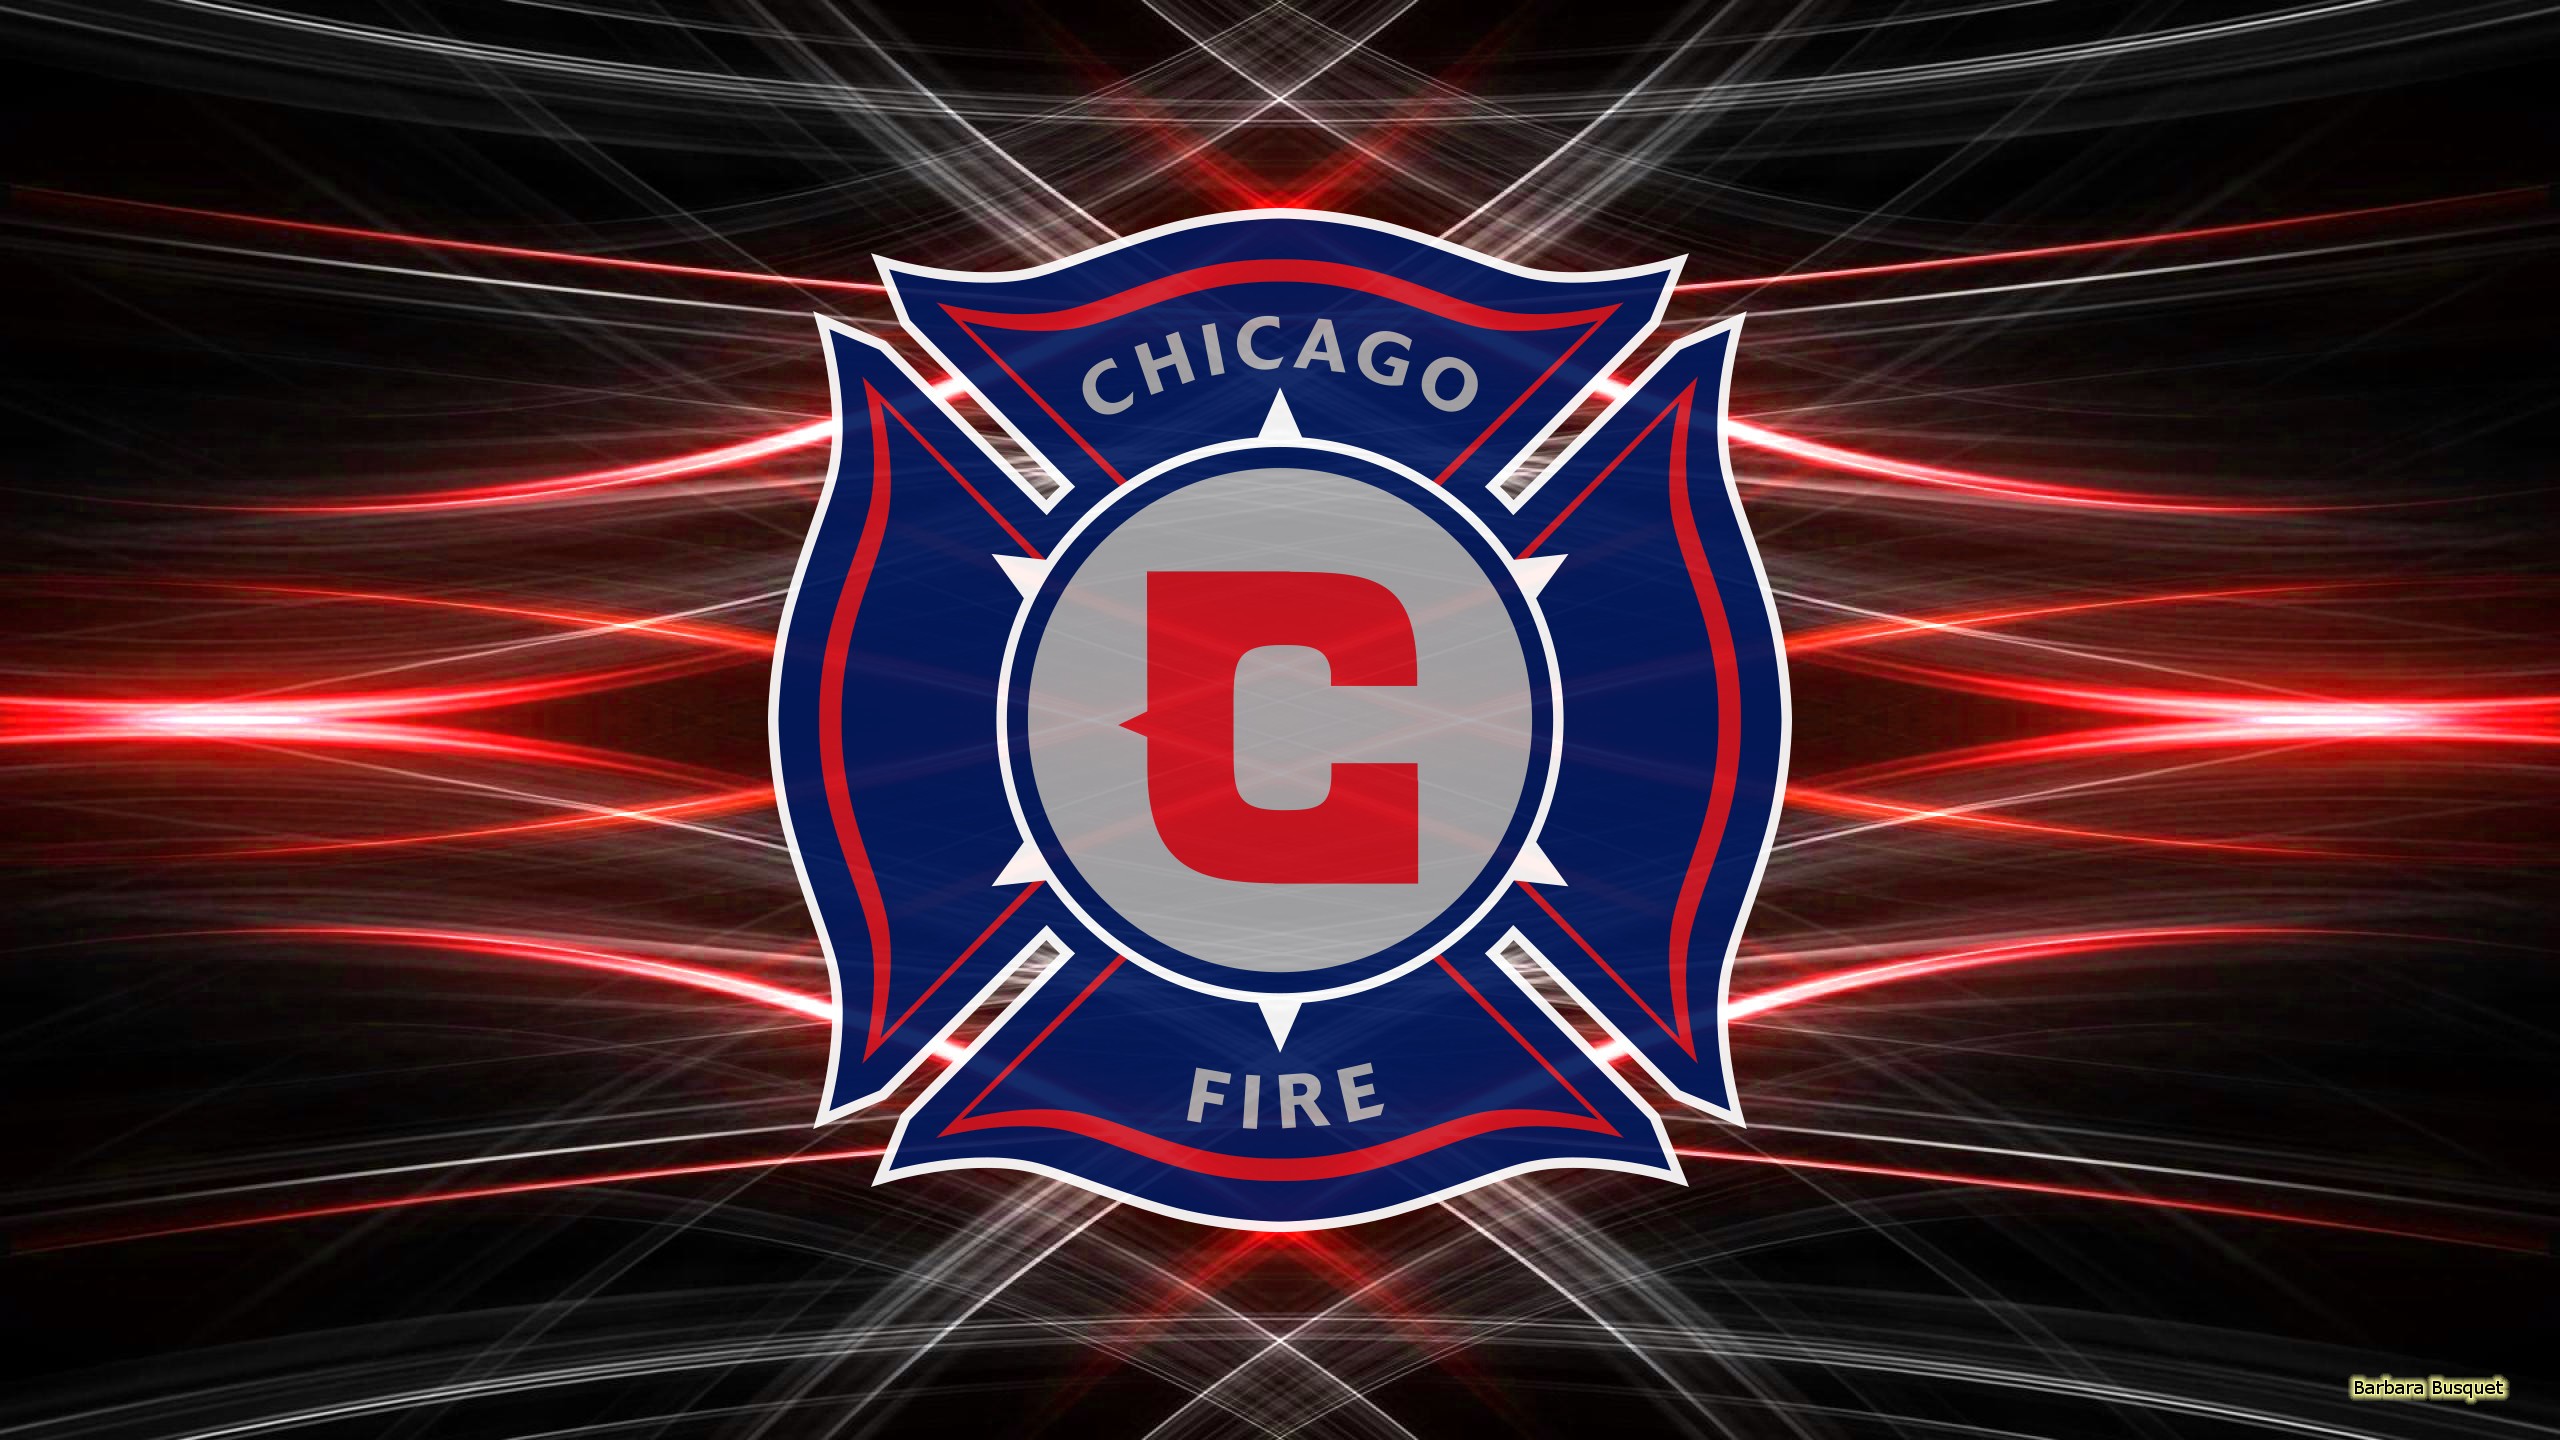 Chicago Fire Soccer Club Wallpaper Full HD Baltana